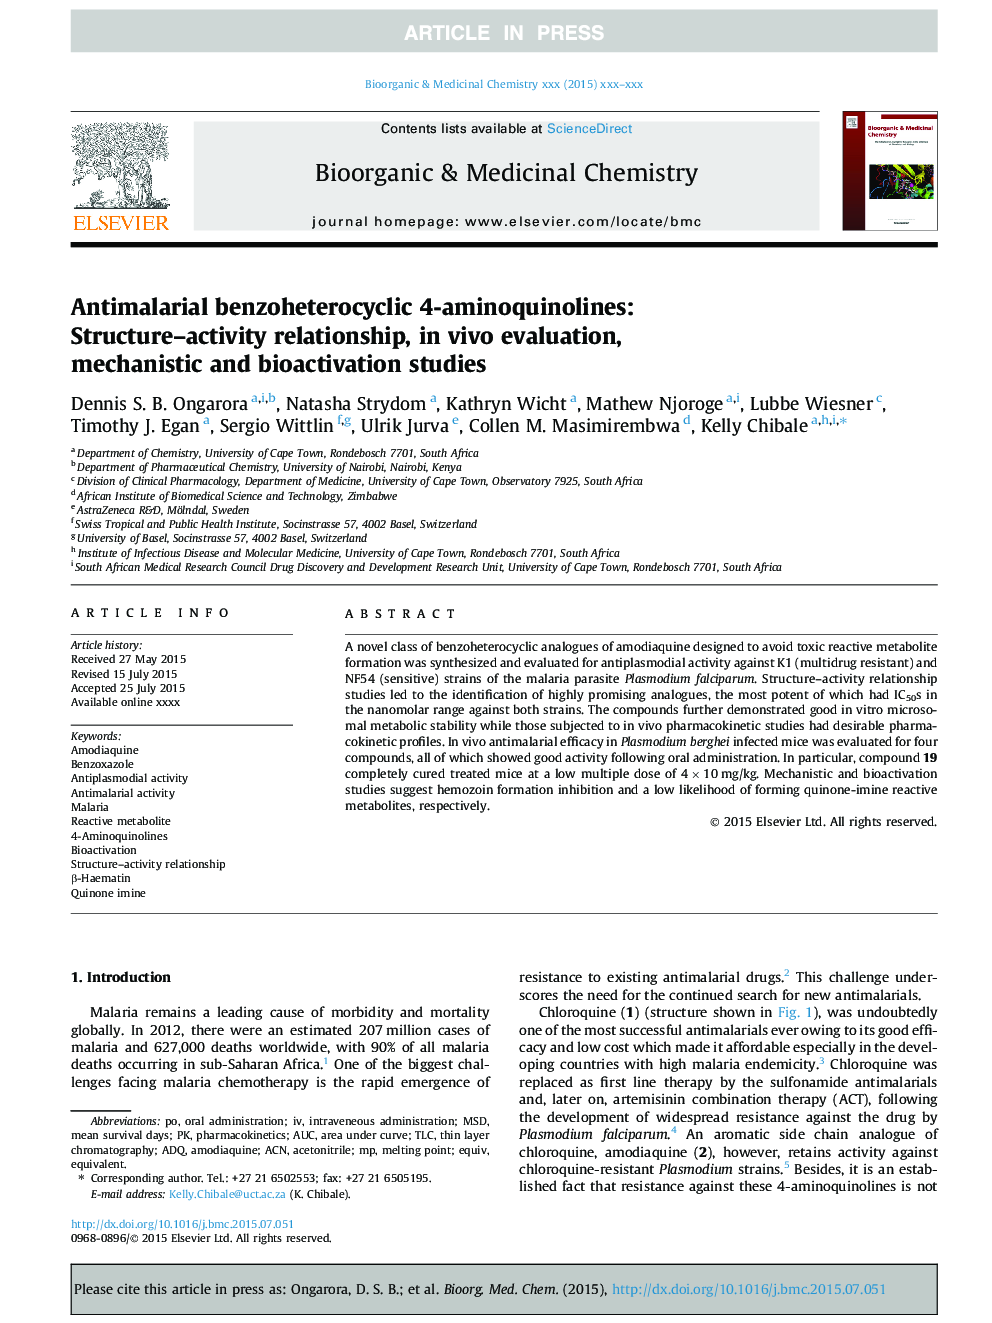 Antimalarial benzoheterocyclic 4-aminoquinolines: Structure-activity relationship, in vivo evaluation, mechanistic and bioactivation studies